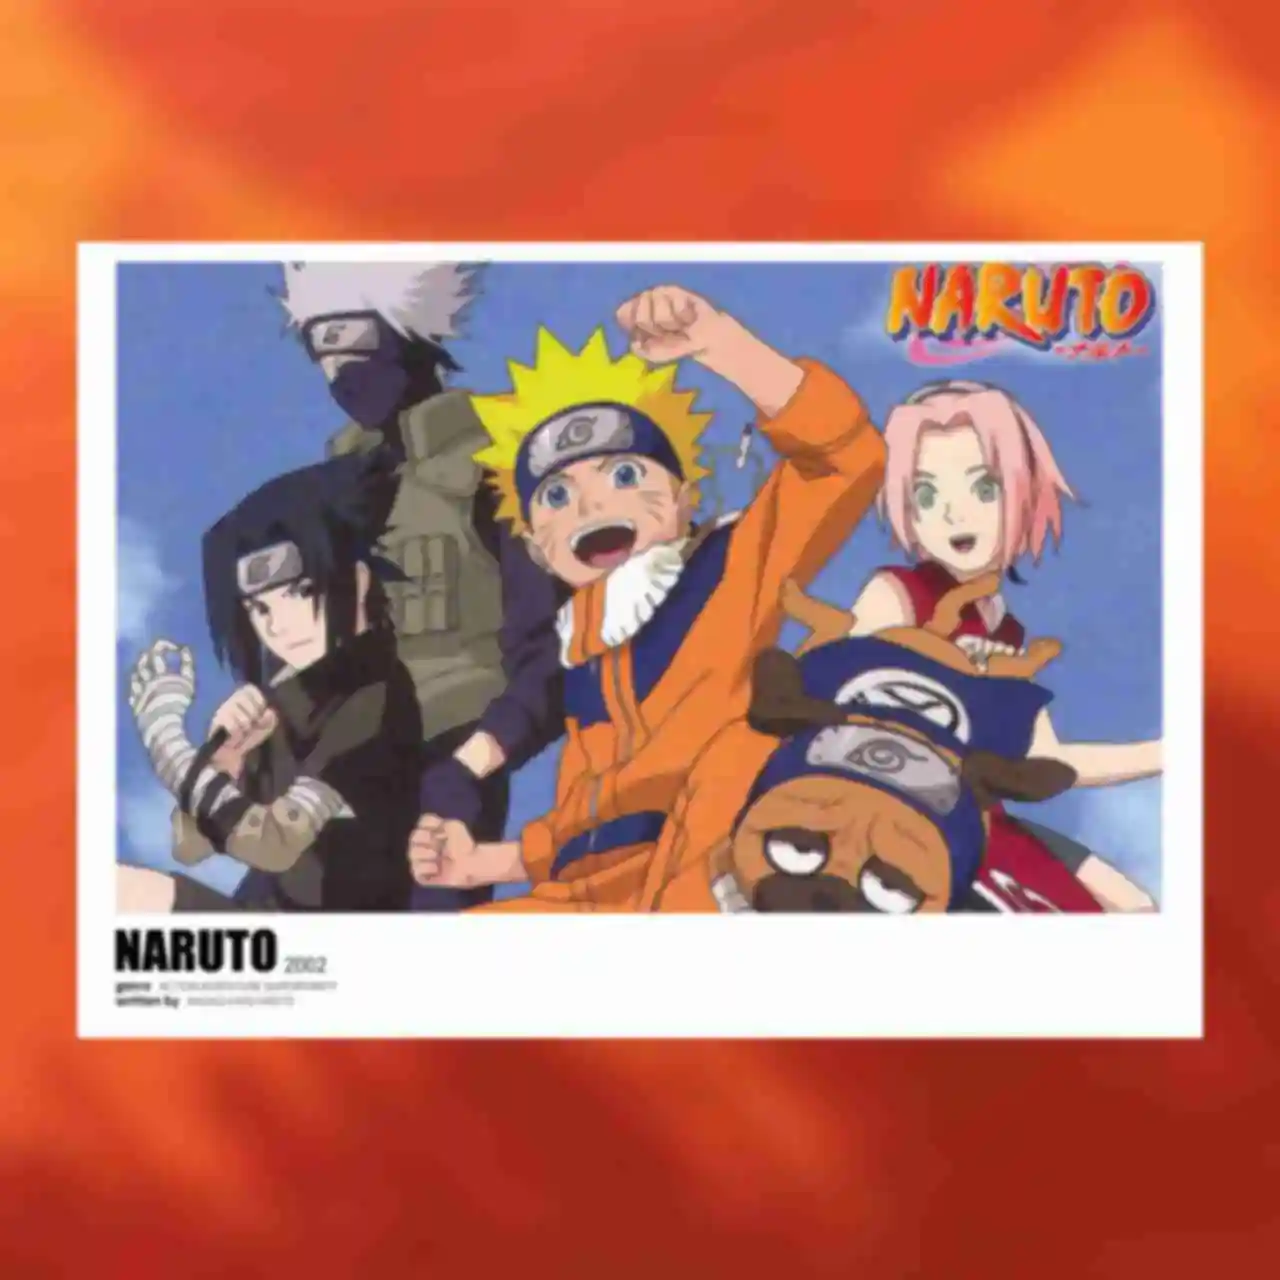 Постер №2 ⦁ Друзья ⦁ Наруто, Саскє, Сакура, Какаши ⦁ Плакат Команда 7 ⦁ Сувениры Наруто ⦁ Подарки в стиле аниме Naruto